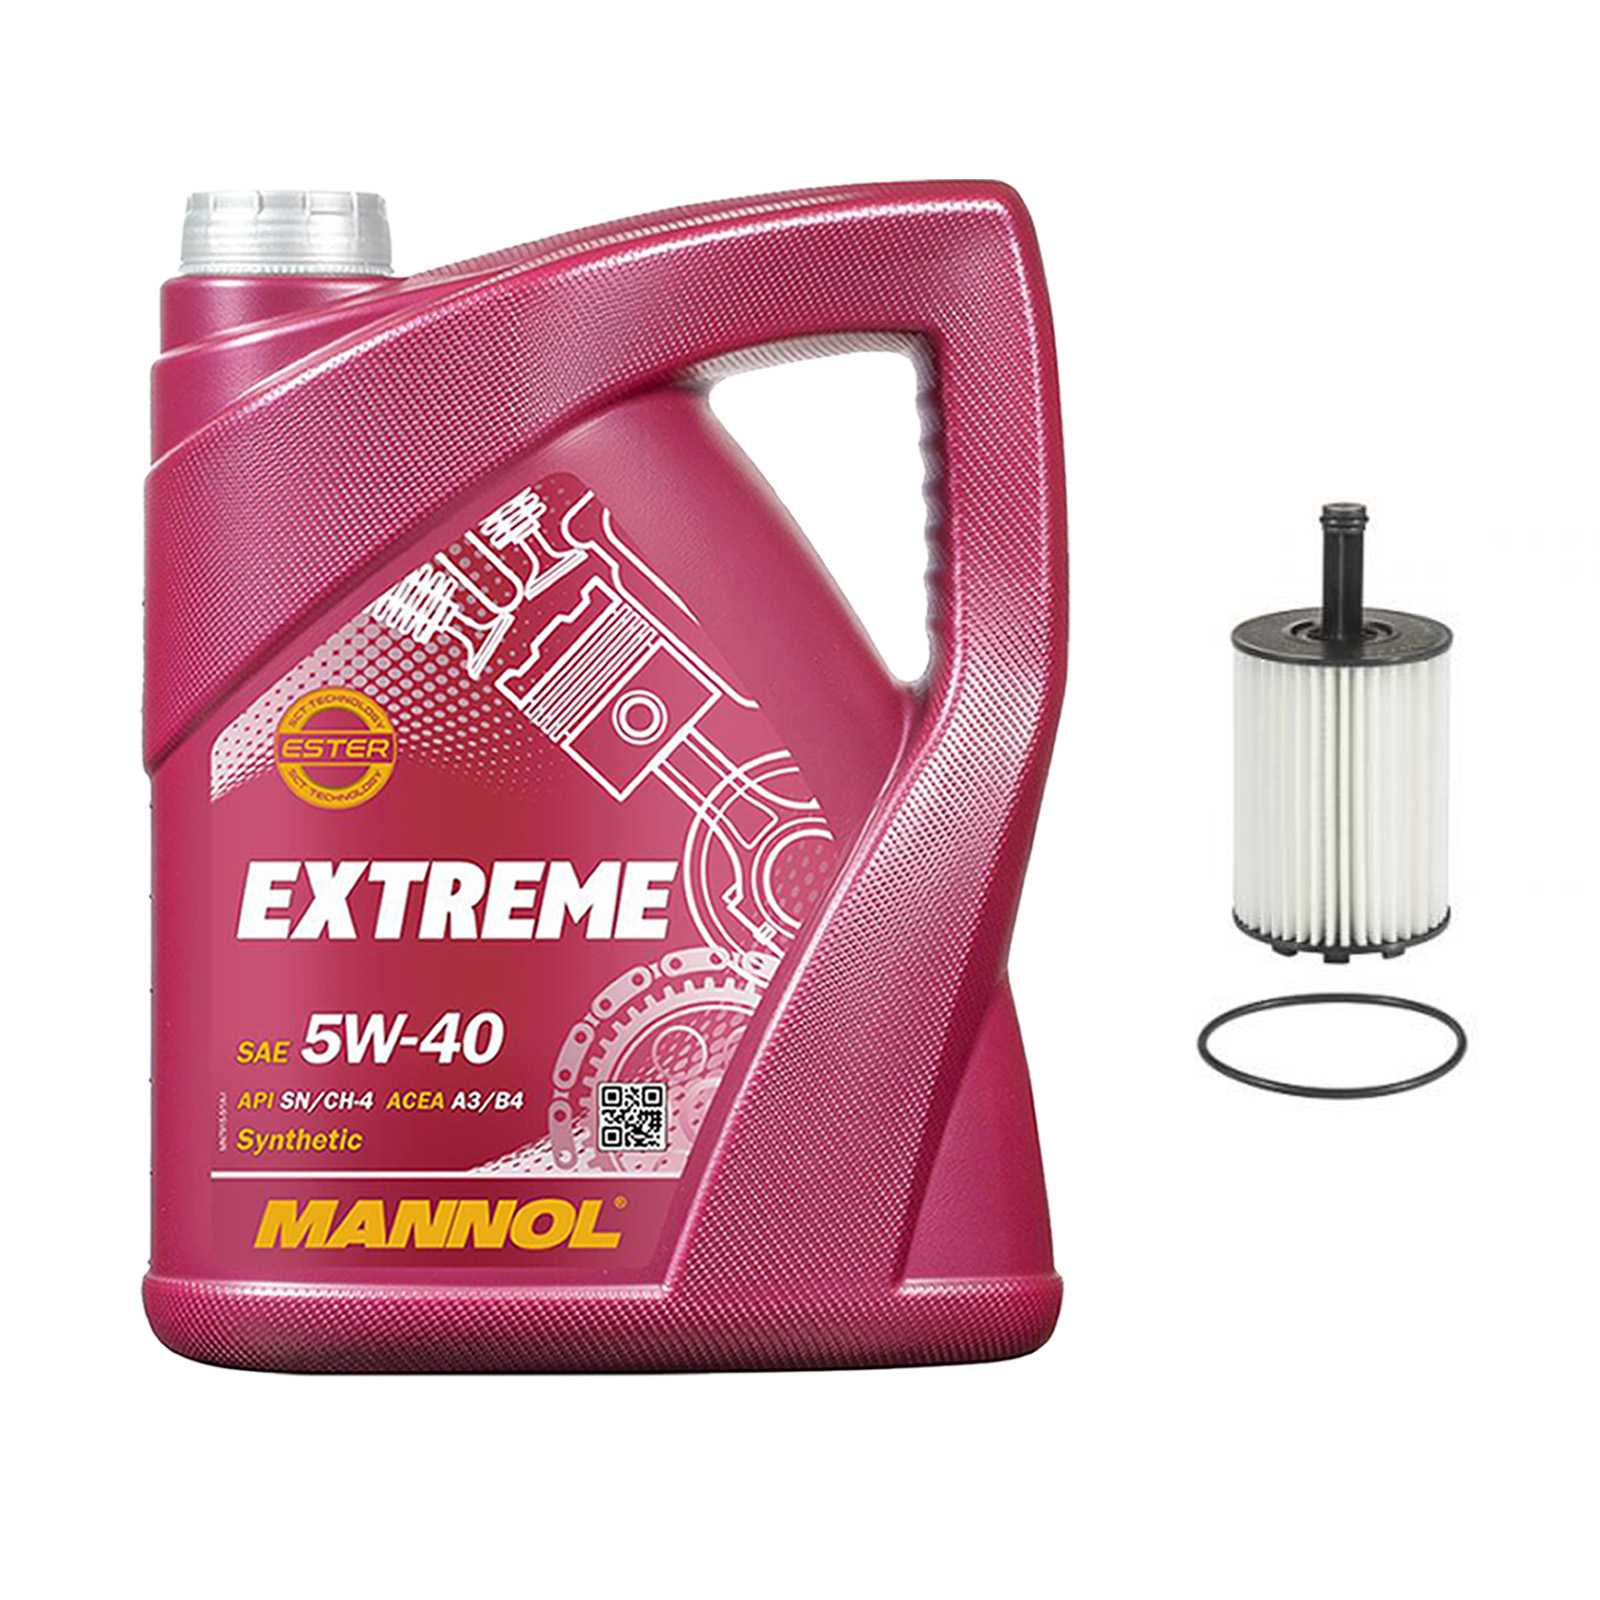 Inspektionskit MANNOL Extreme 5W-40 für Vw New Beetle Rsi 3.2 4motion